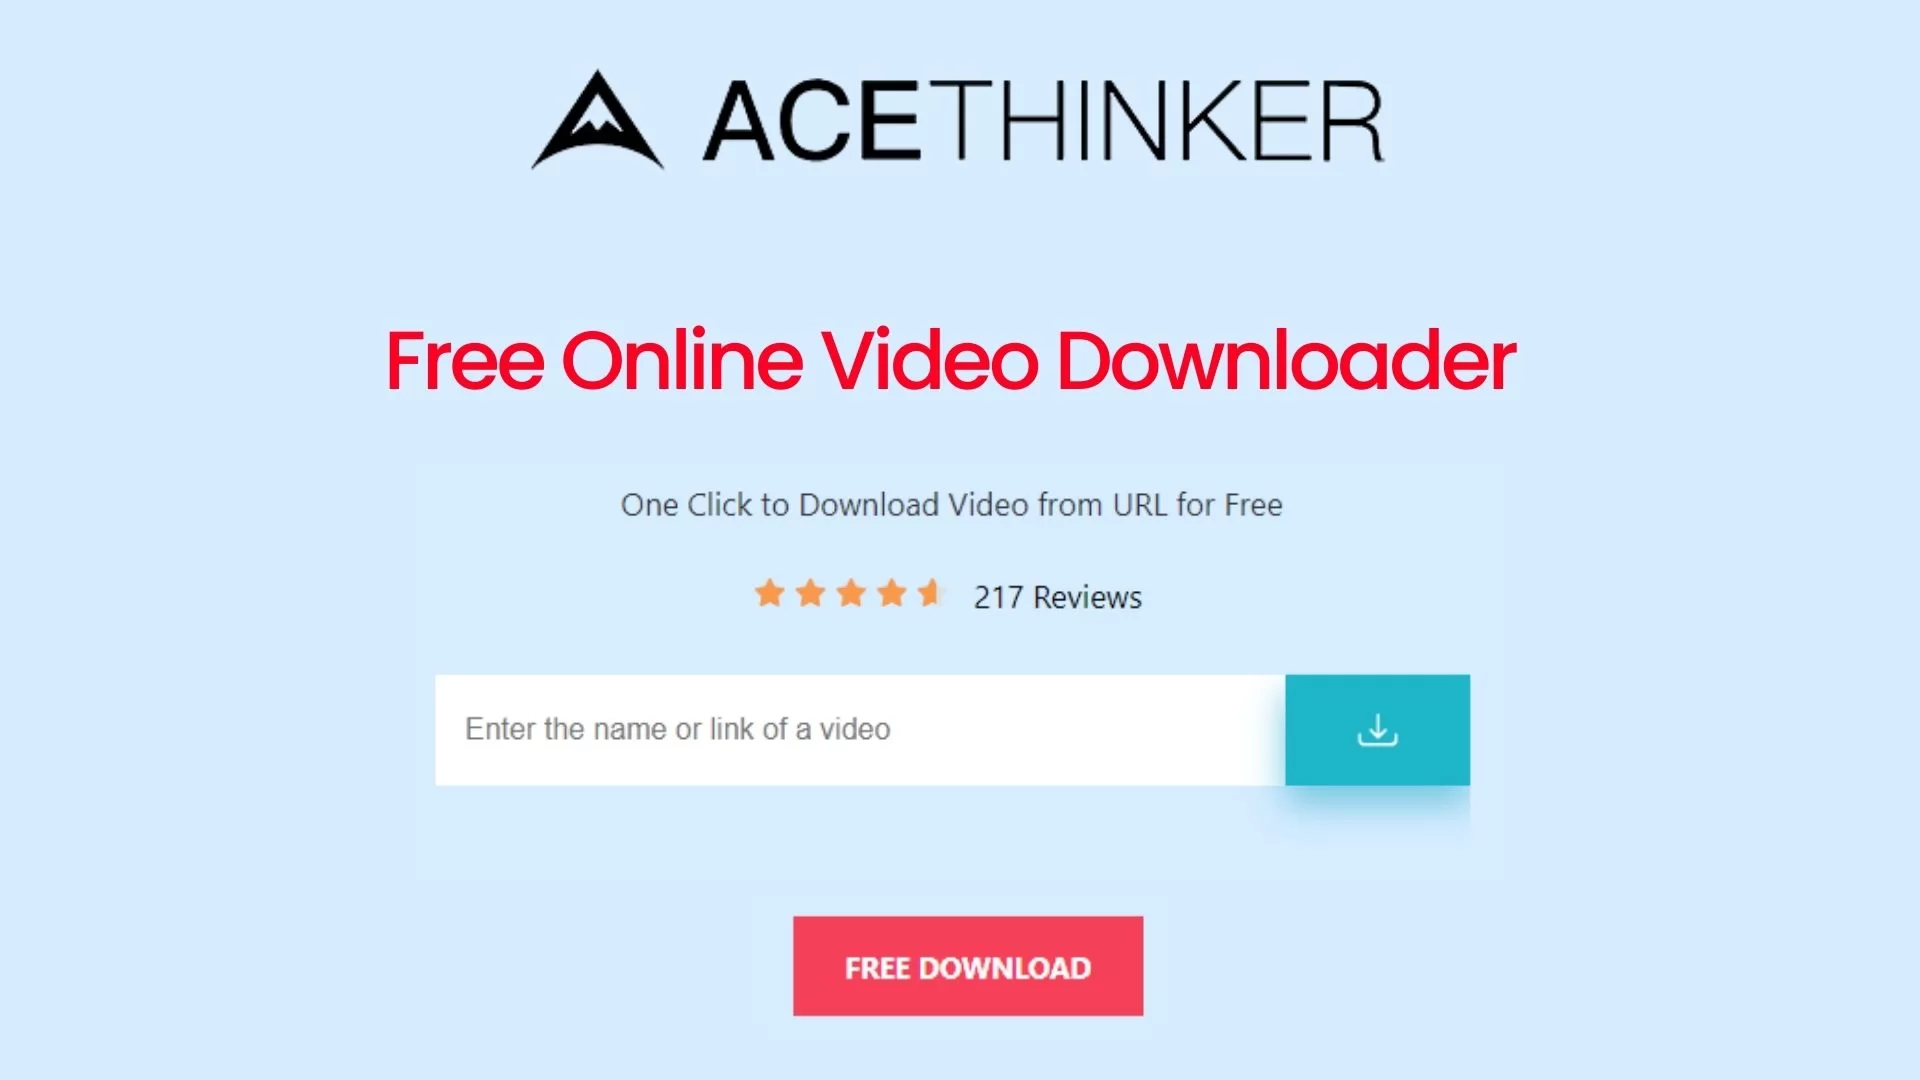 How The AceThinker Free Online Downloader Works